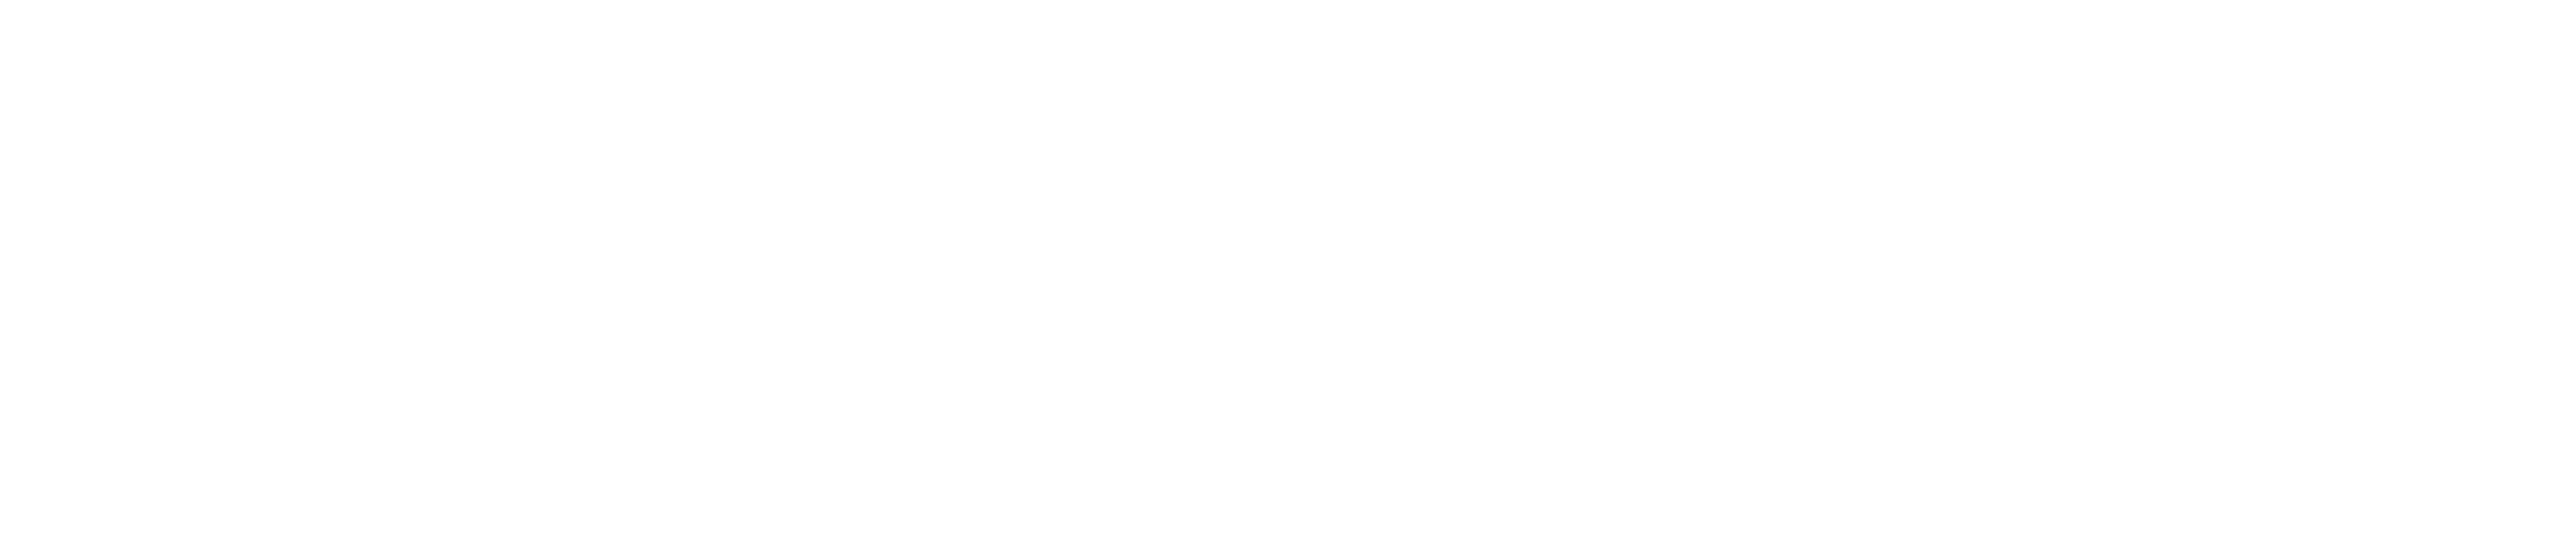 European logo colored